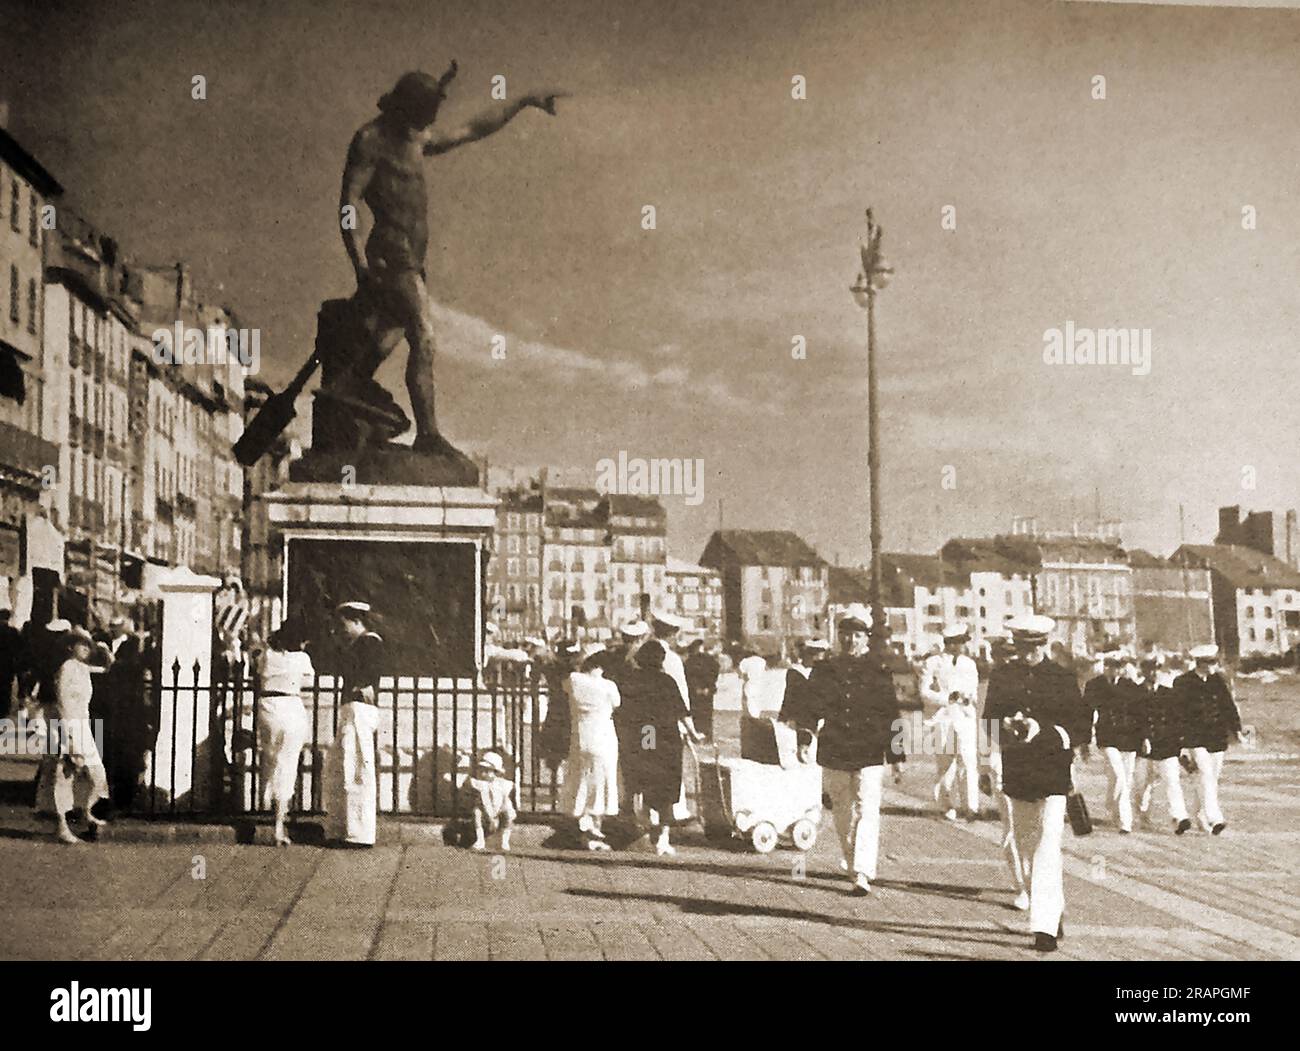 A scene on the Quai Kroonstad )aka Cronstadt Wharf &   :Quai Cronstadtin),  Toulon, France in 1939.- Une vieille scène sur le quai Kroonstad à Toulon, France en 1939. Stock Photo